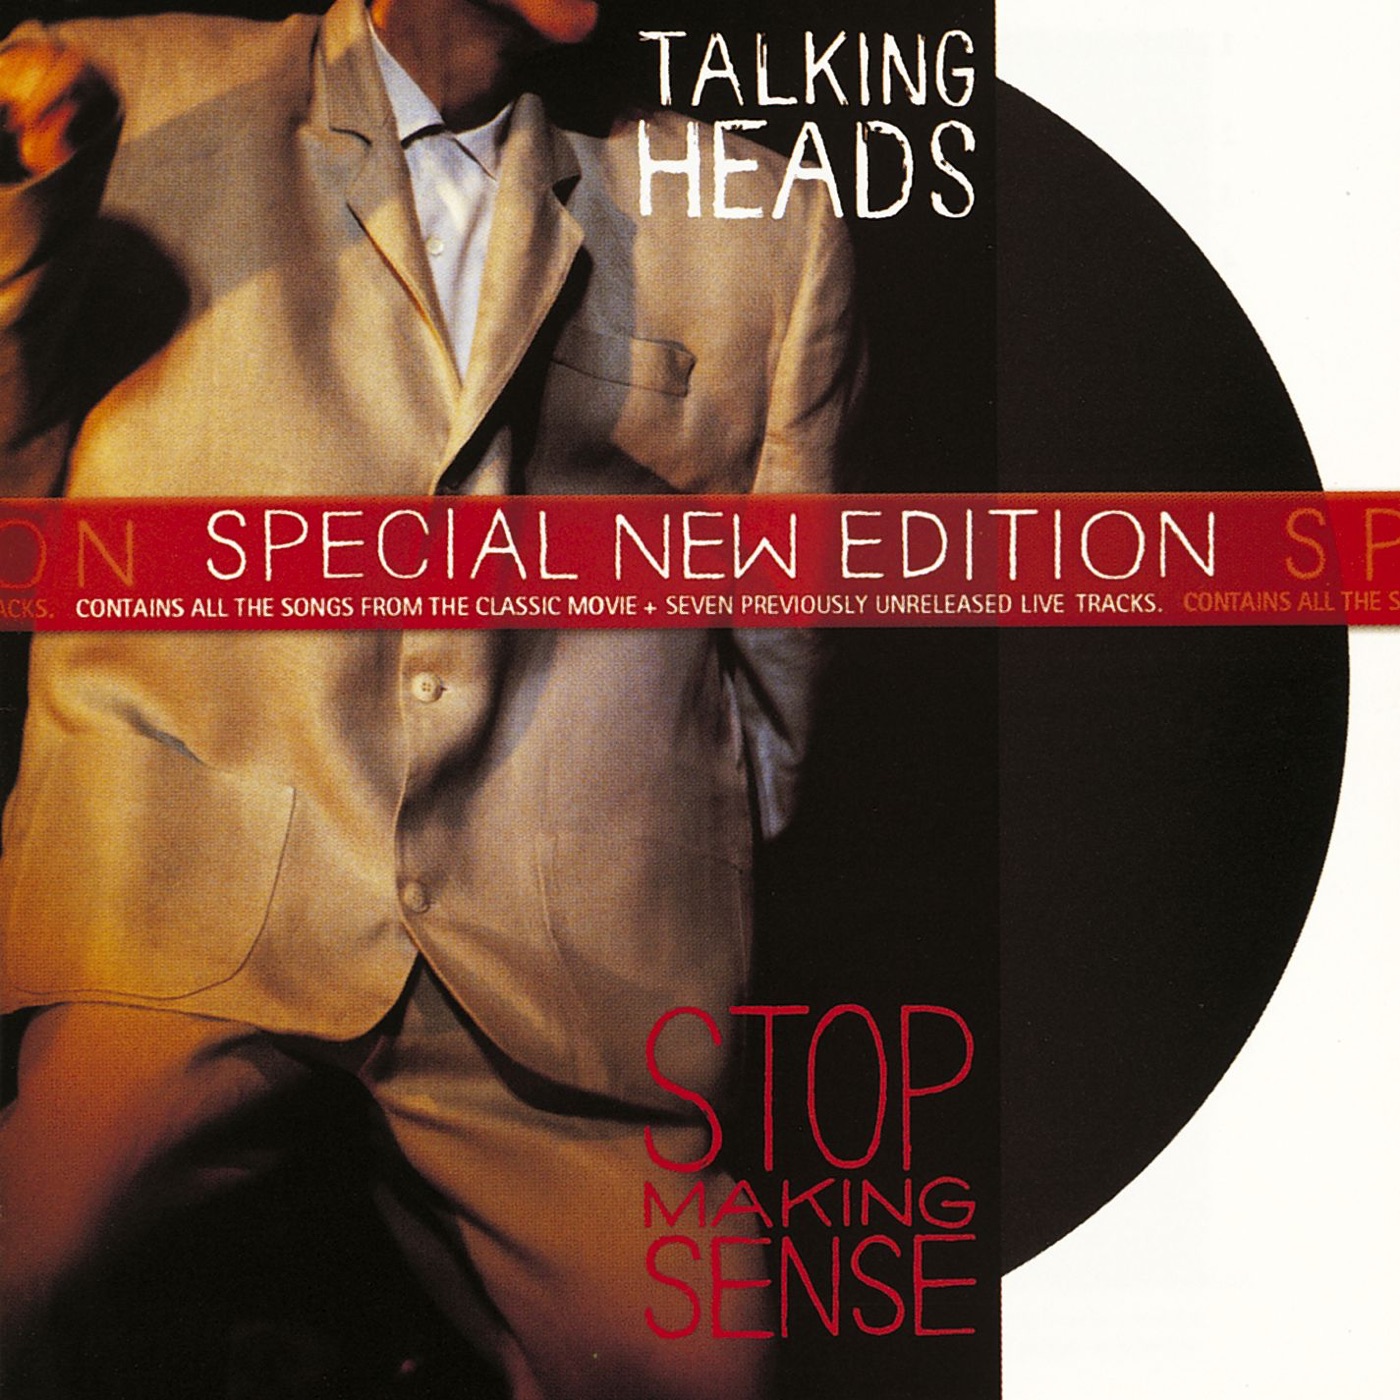 Stop Making Sense by Talking Heads